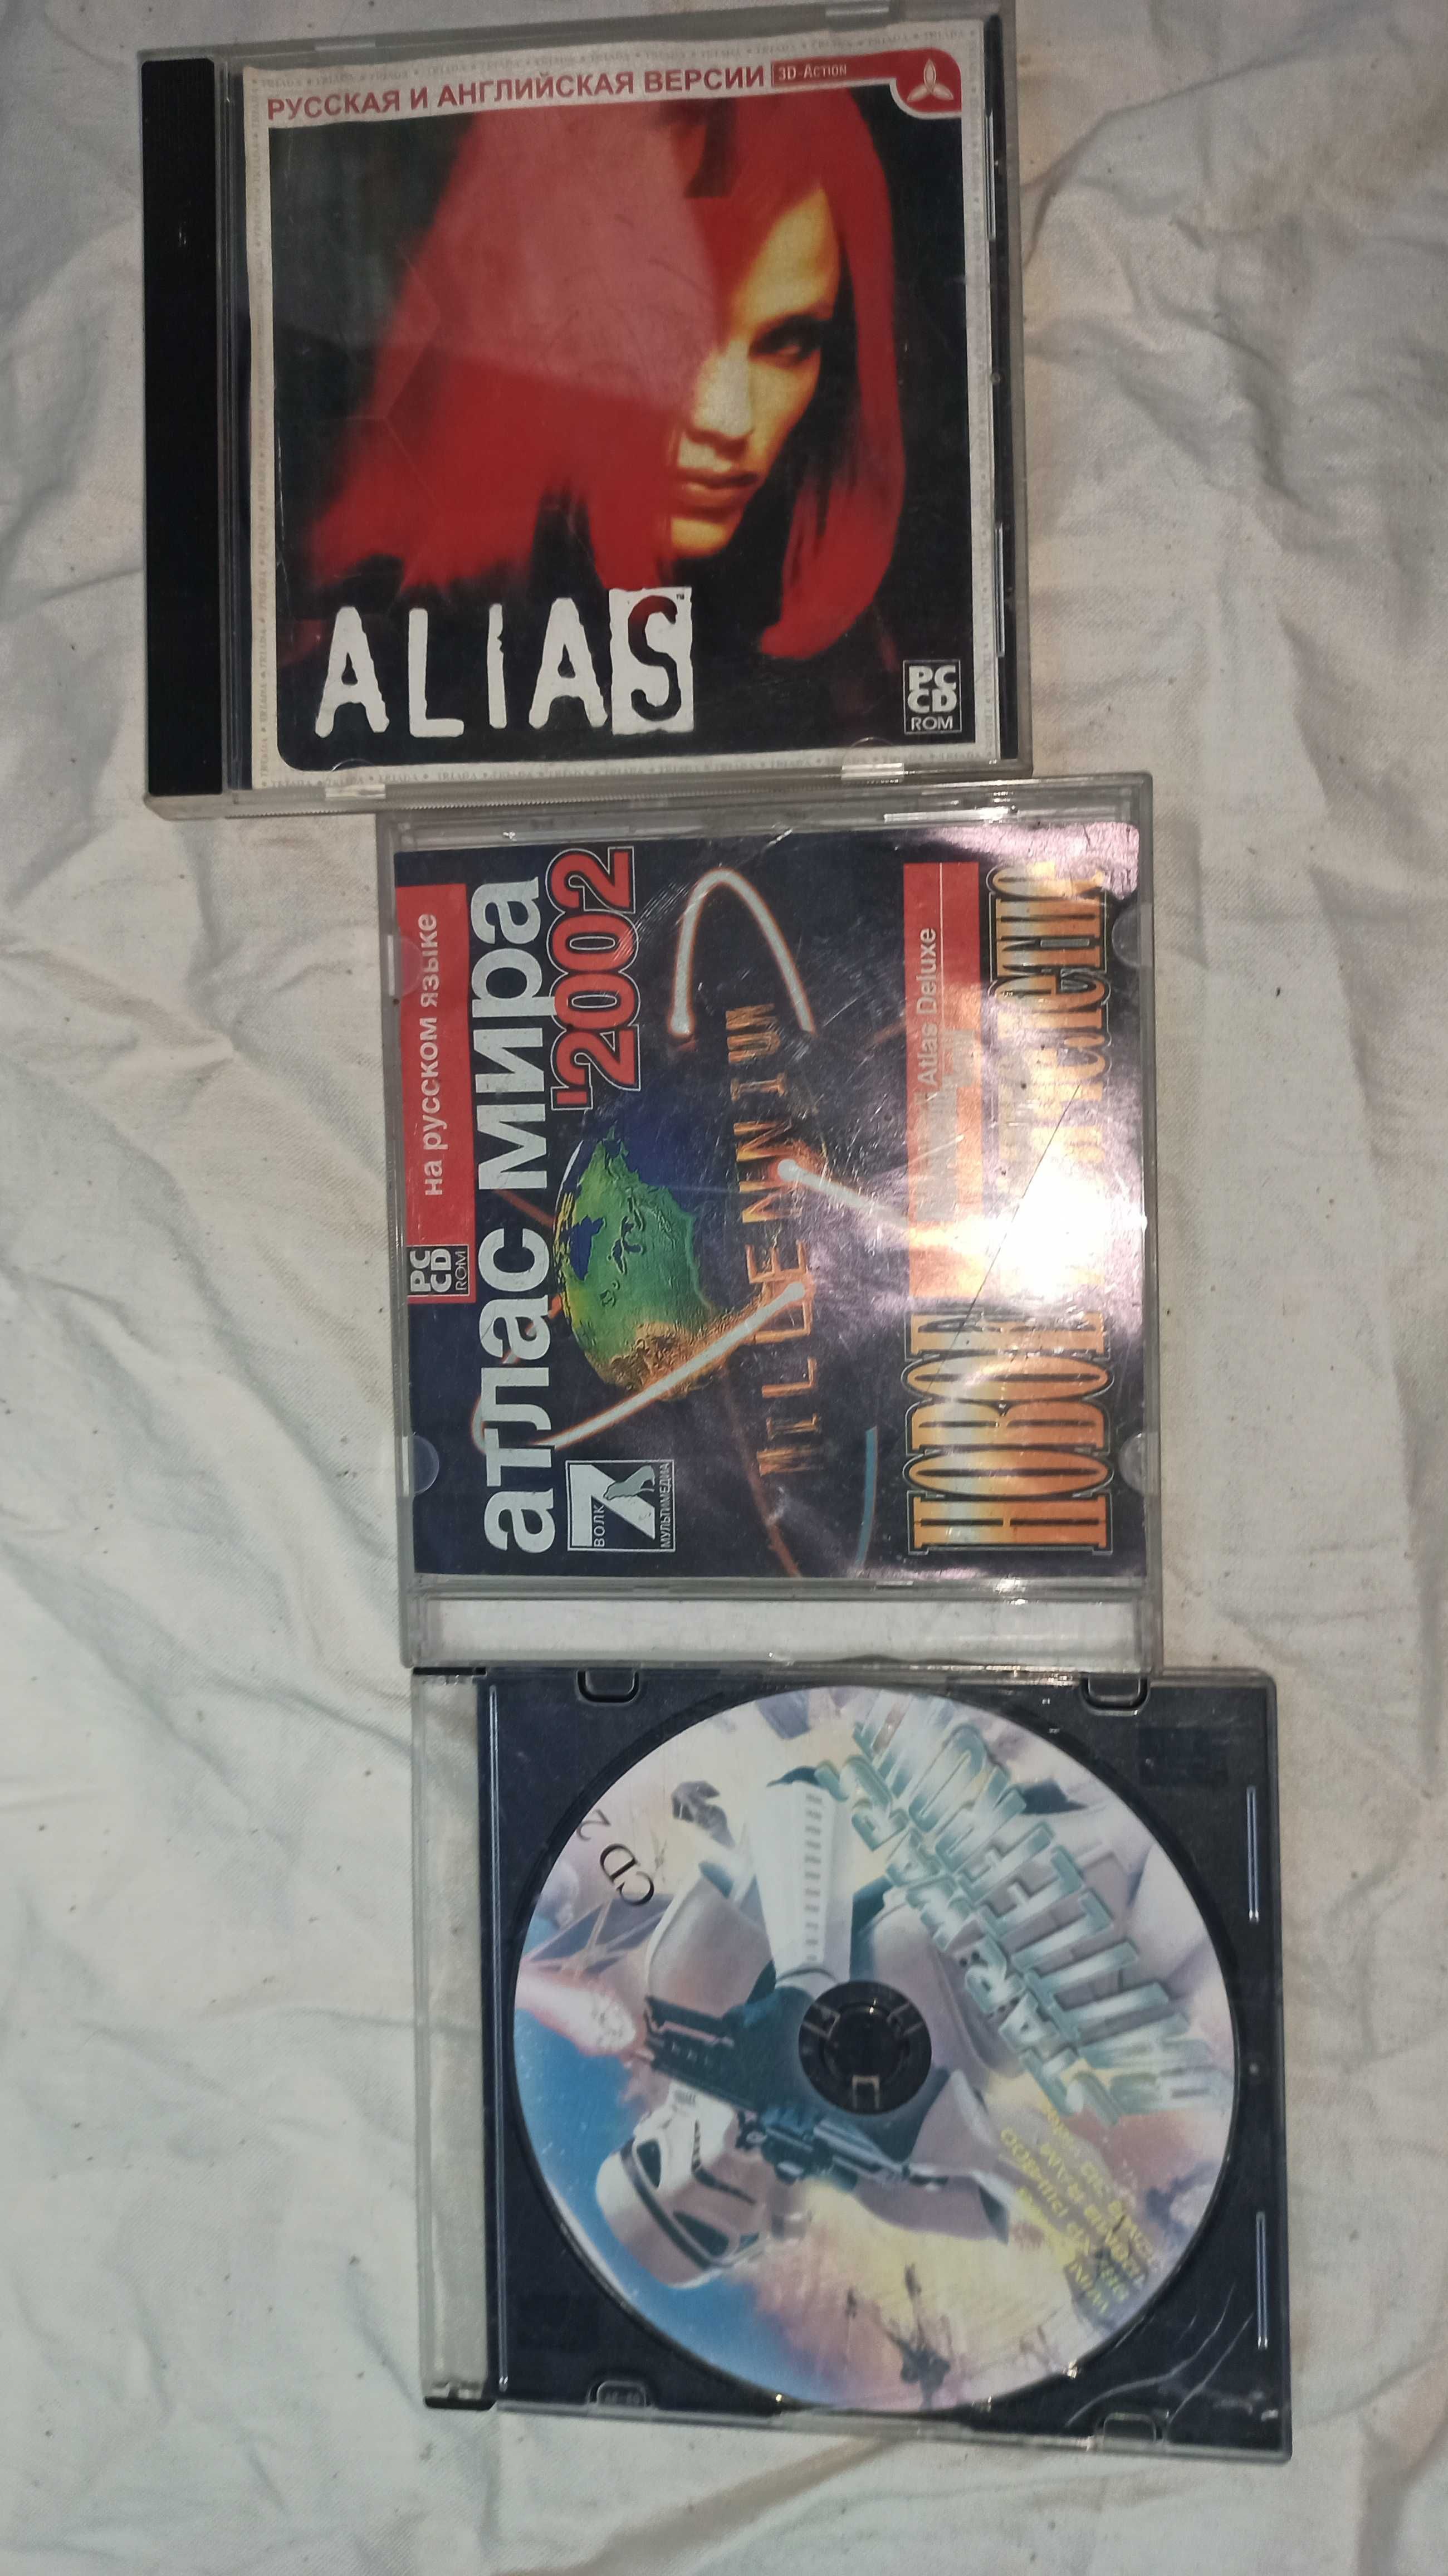 Комплект дисков Star Wars , Alias , Атлас мира